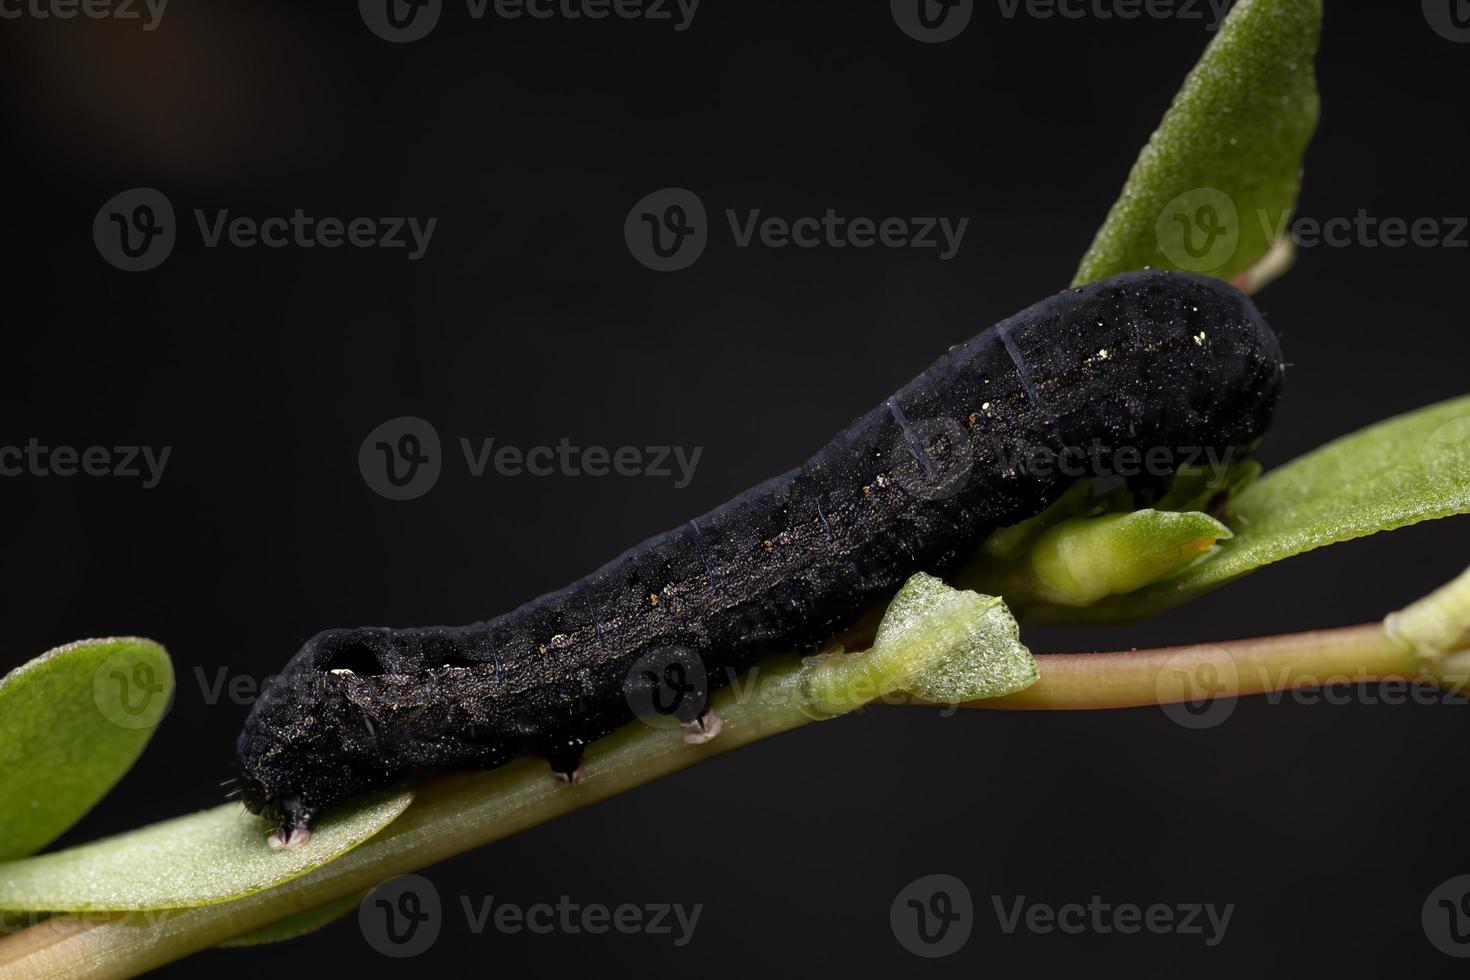 Caterpillar eatinga Common Purslane plant photo